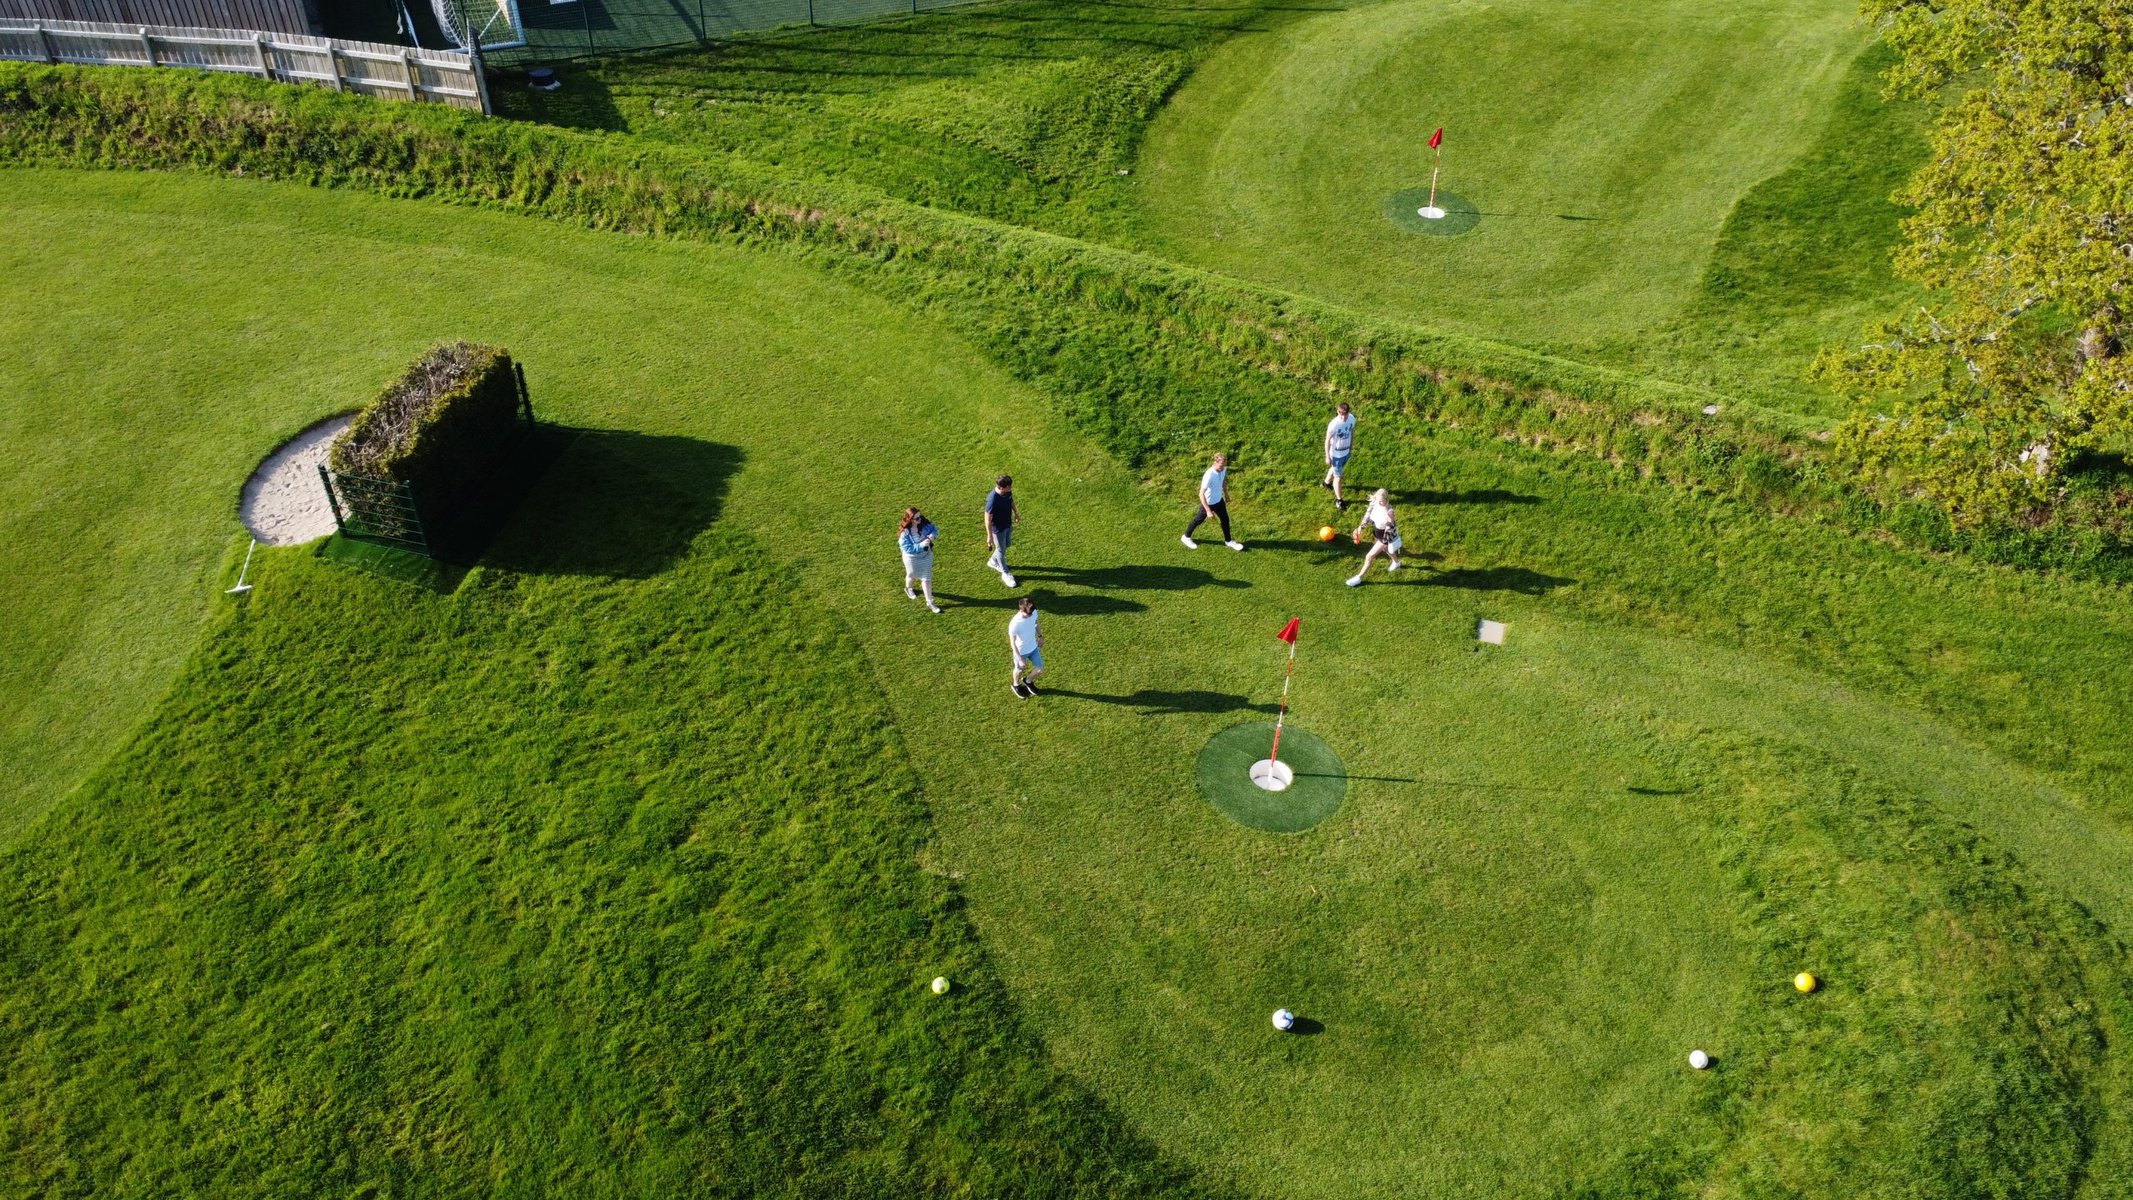 Playing FootballGolf - from above - at Cornwall Football Golf Park